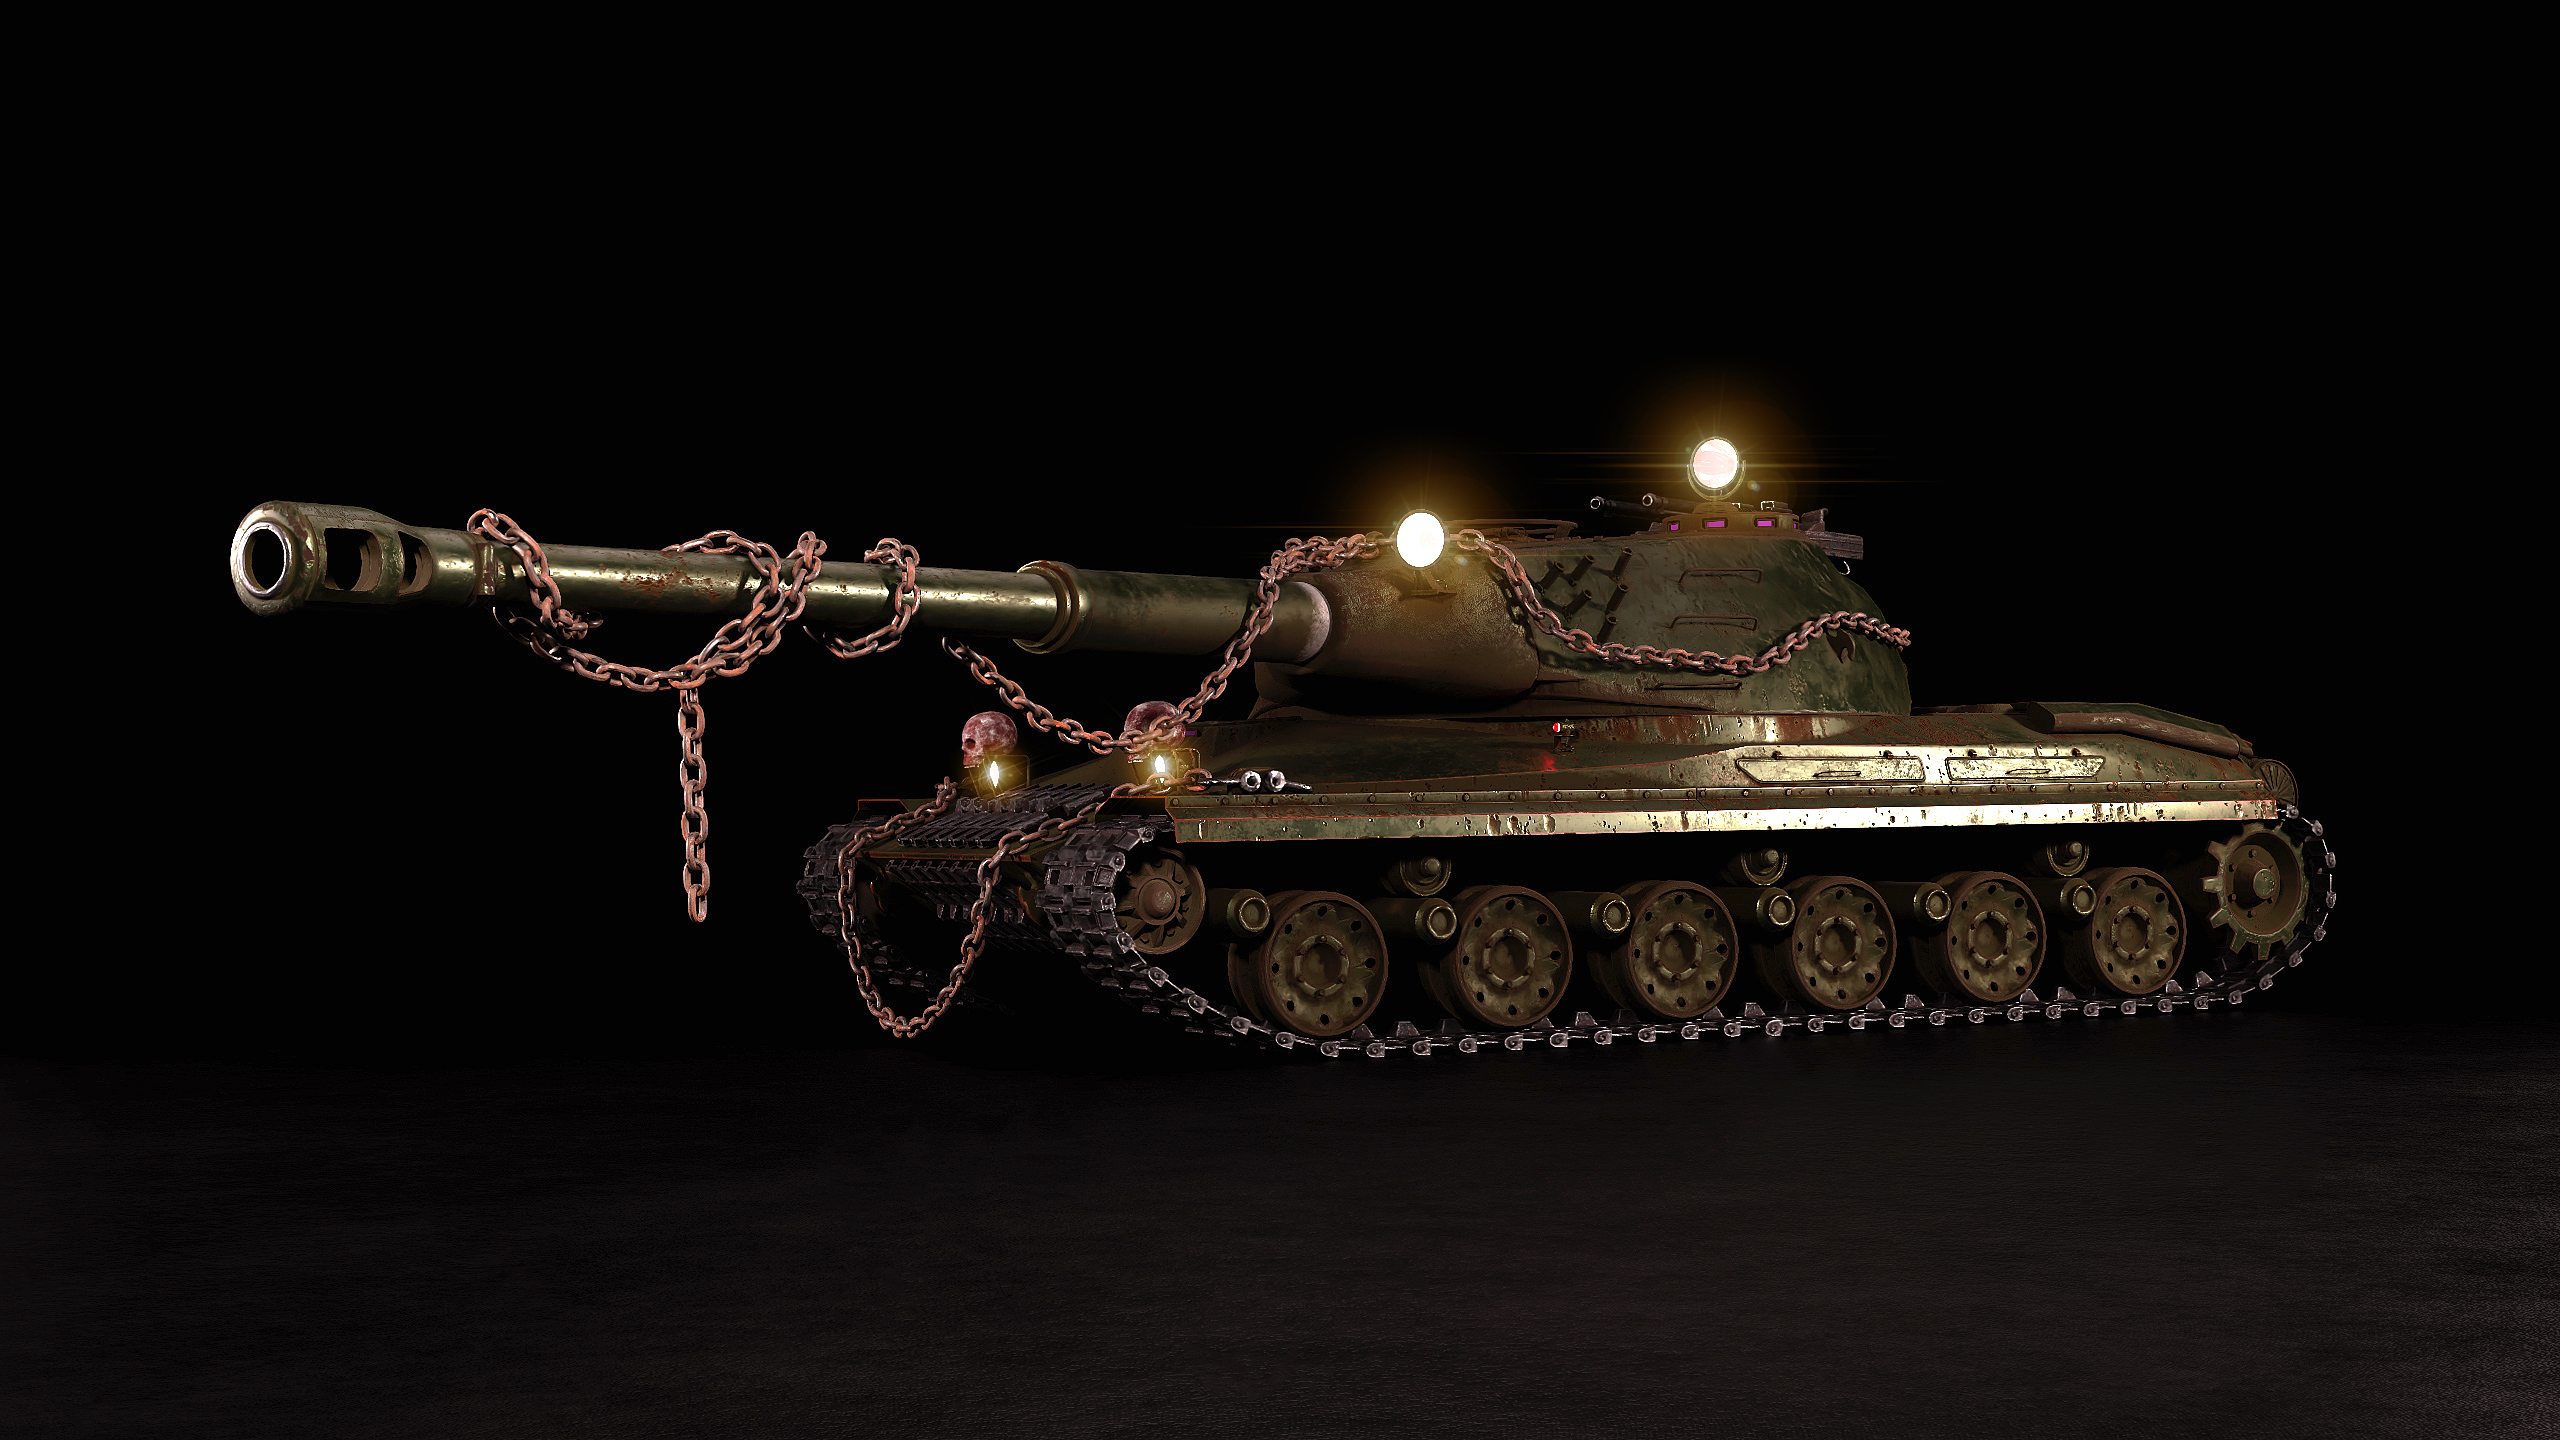 60TP 60TP The Marauder Tank Cold War Rust Chains Metal Skull Lights 3D CGi Fictional War Military 2560x1440